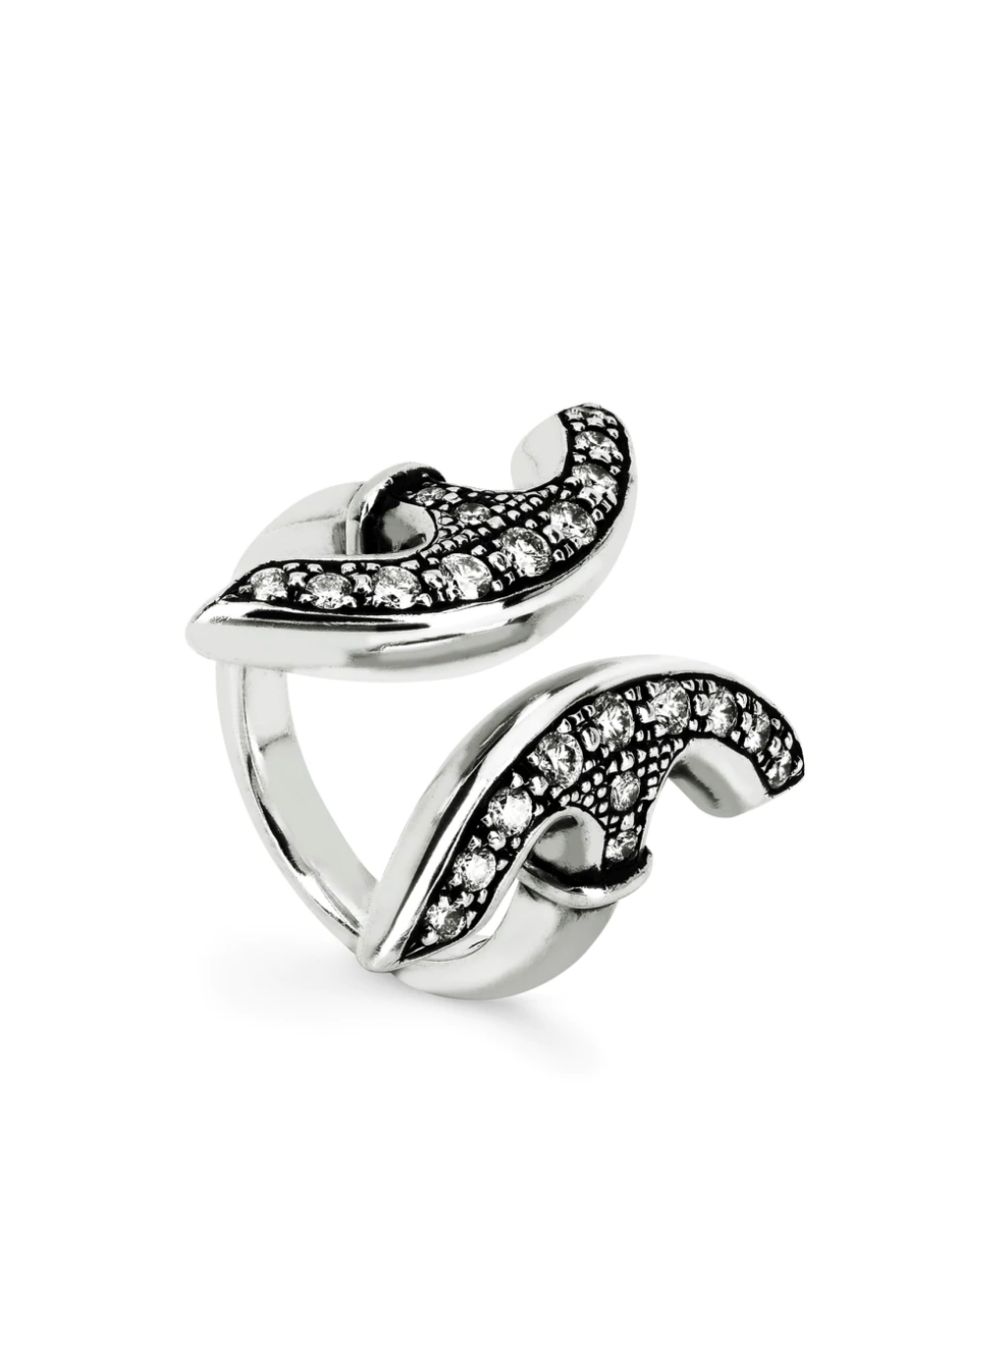 HOORSENBUHS | Revere Ring with Diamonds in Sterling Silver